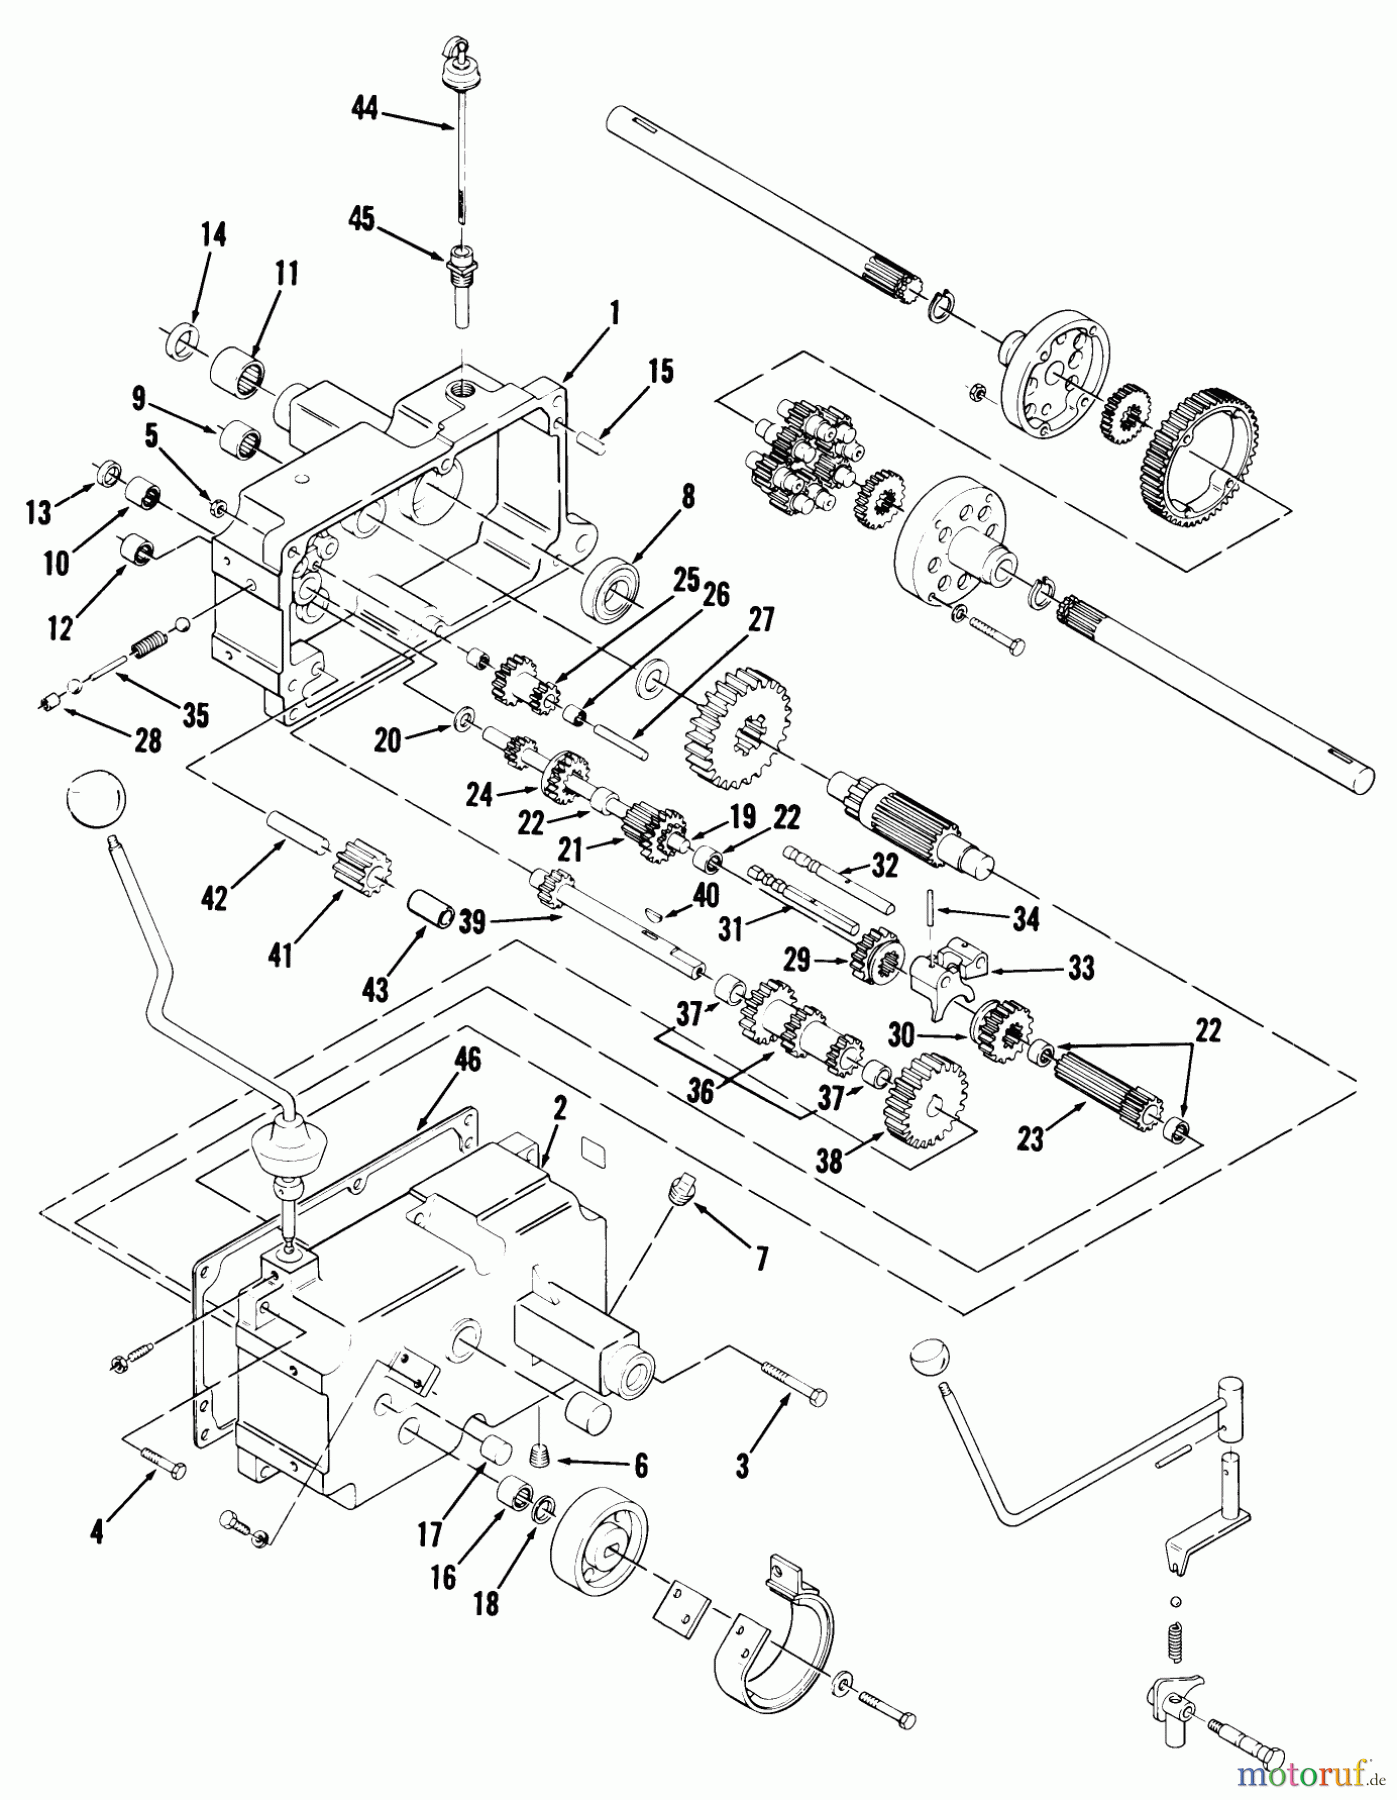  Toro Neu Mowers, Lawn & Garden Tractor Seite 1 01-12KS01 (C-125) - Toro C-125 Automatic Tractor, 1980 MECHANICAL TRANSMISSION-8 SPEED #1